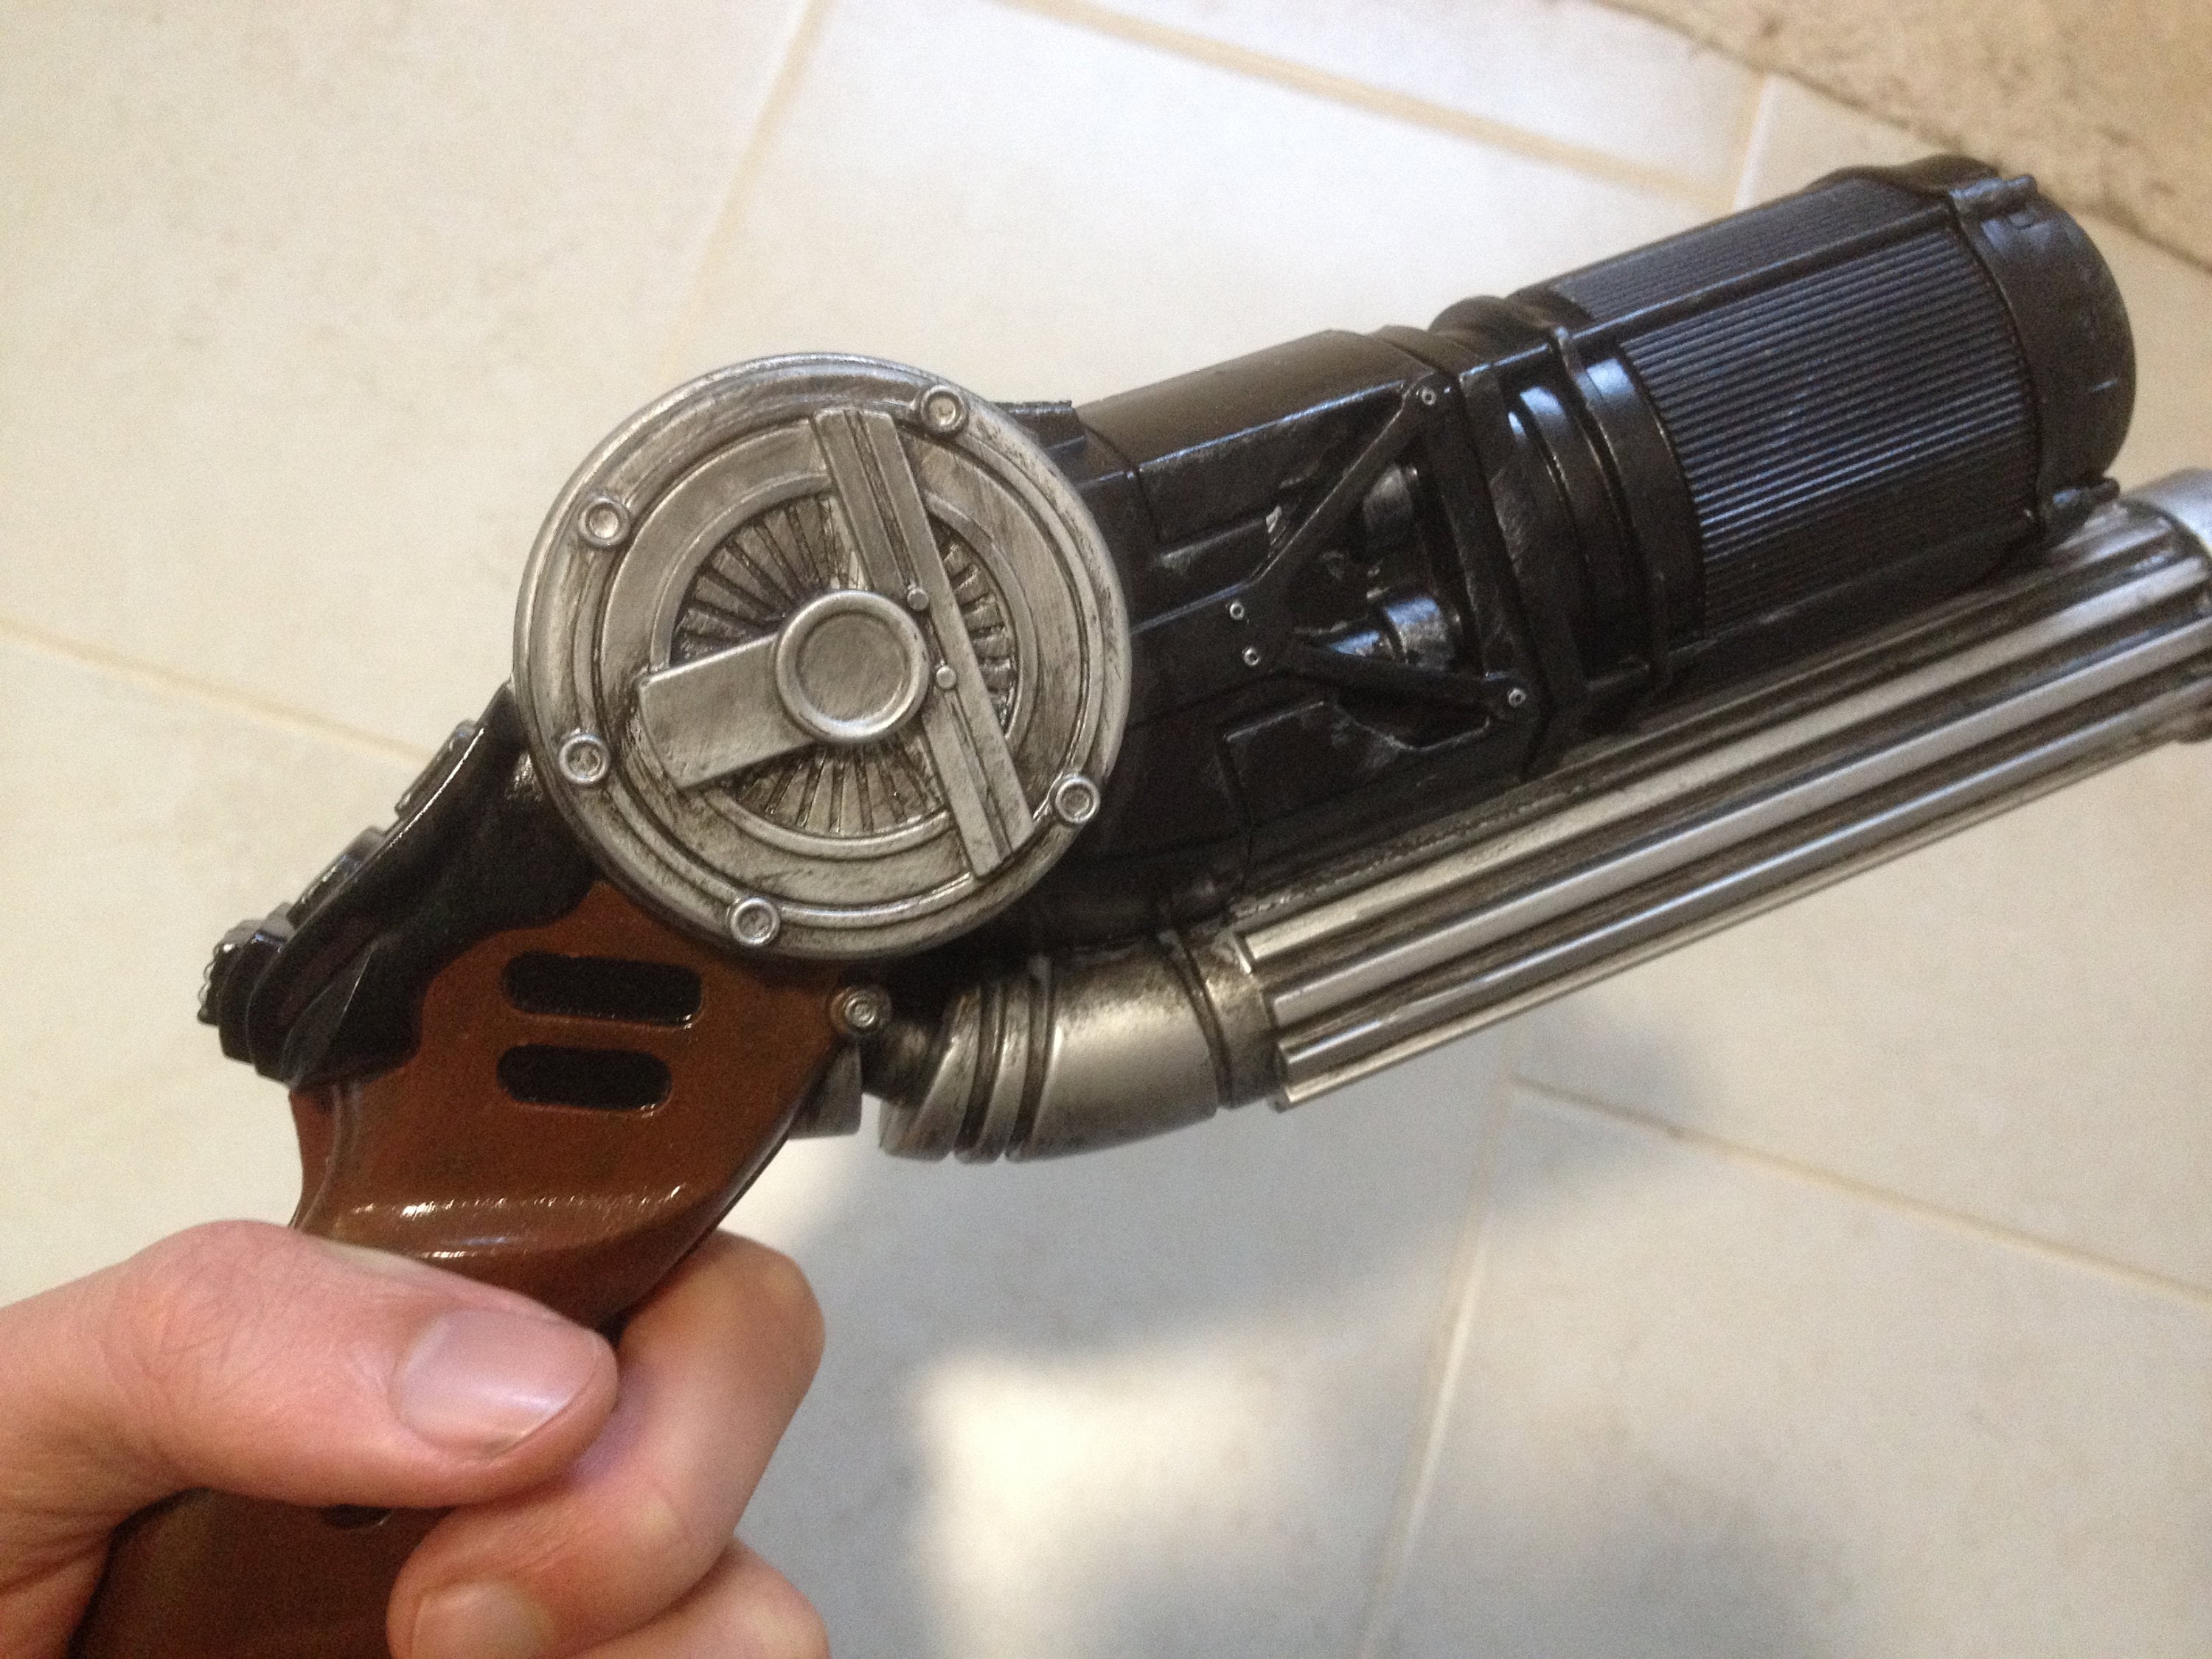 Rudy Harrelson II - Grappling Hook Gun Toy